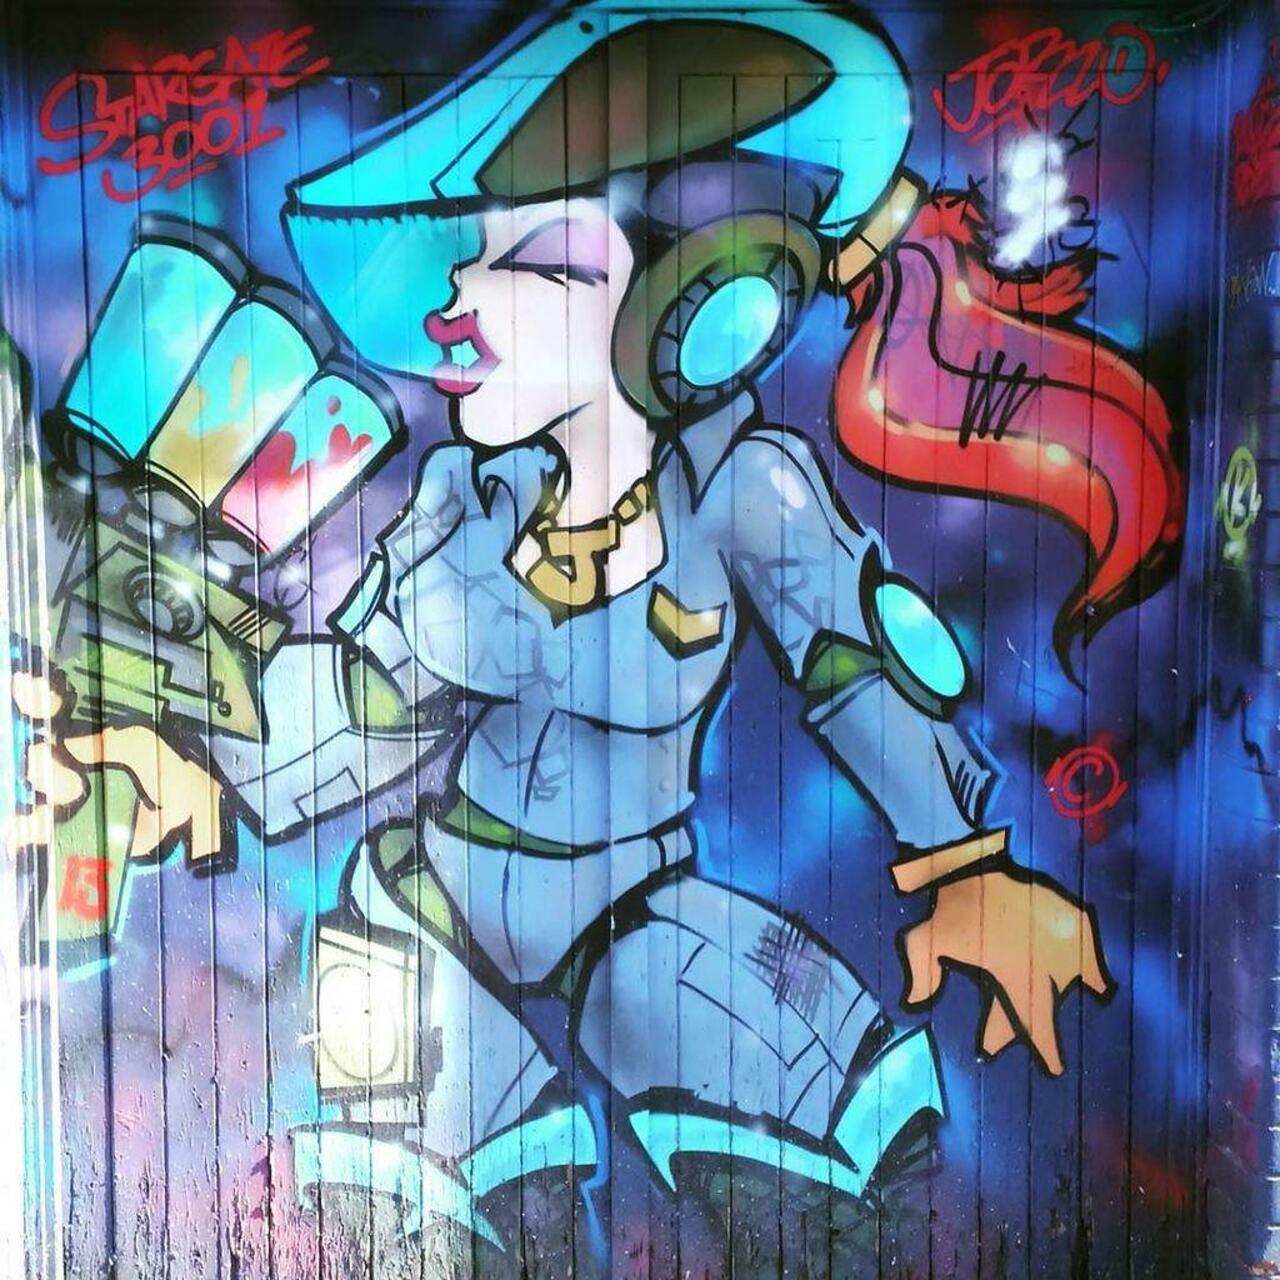 RT @artpushr: via #be.ky52 "http://bit.ly/1LsxpxG" #graffiti #streetart http://t.co/7V5aaaSTAs